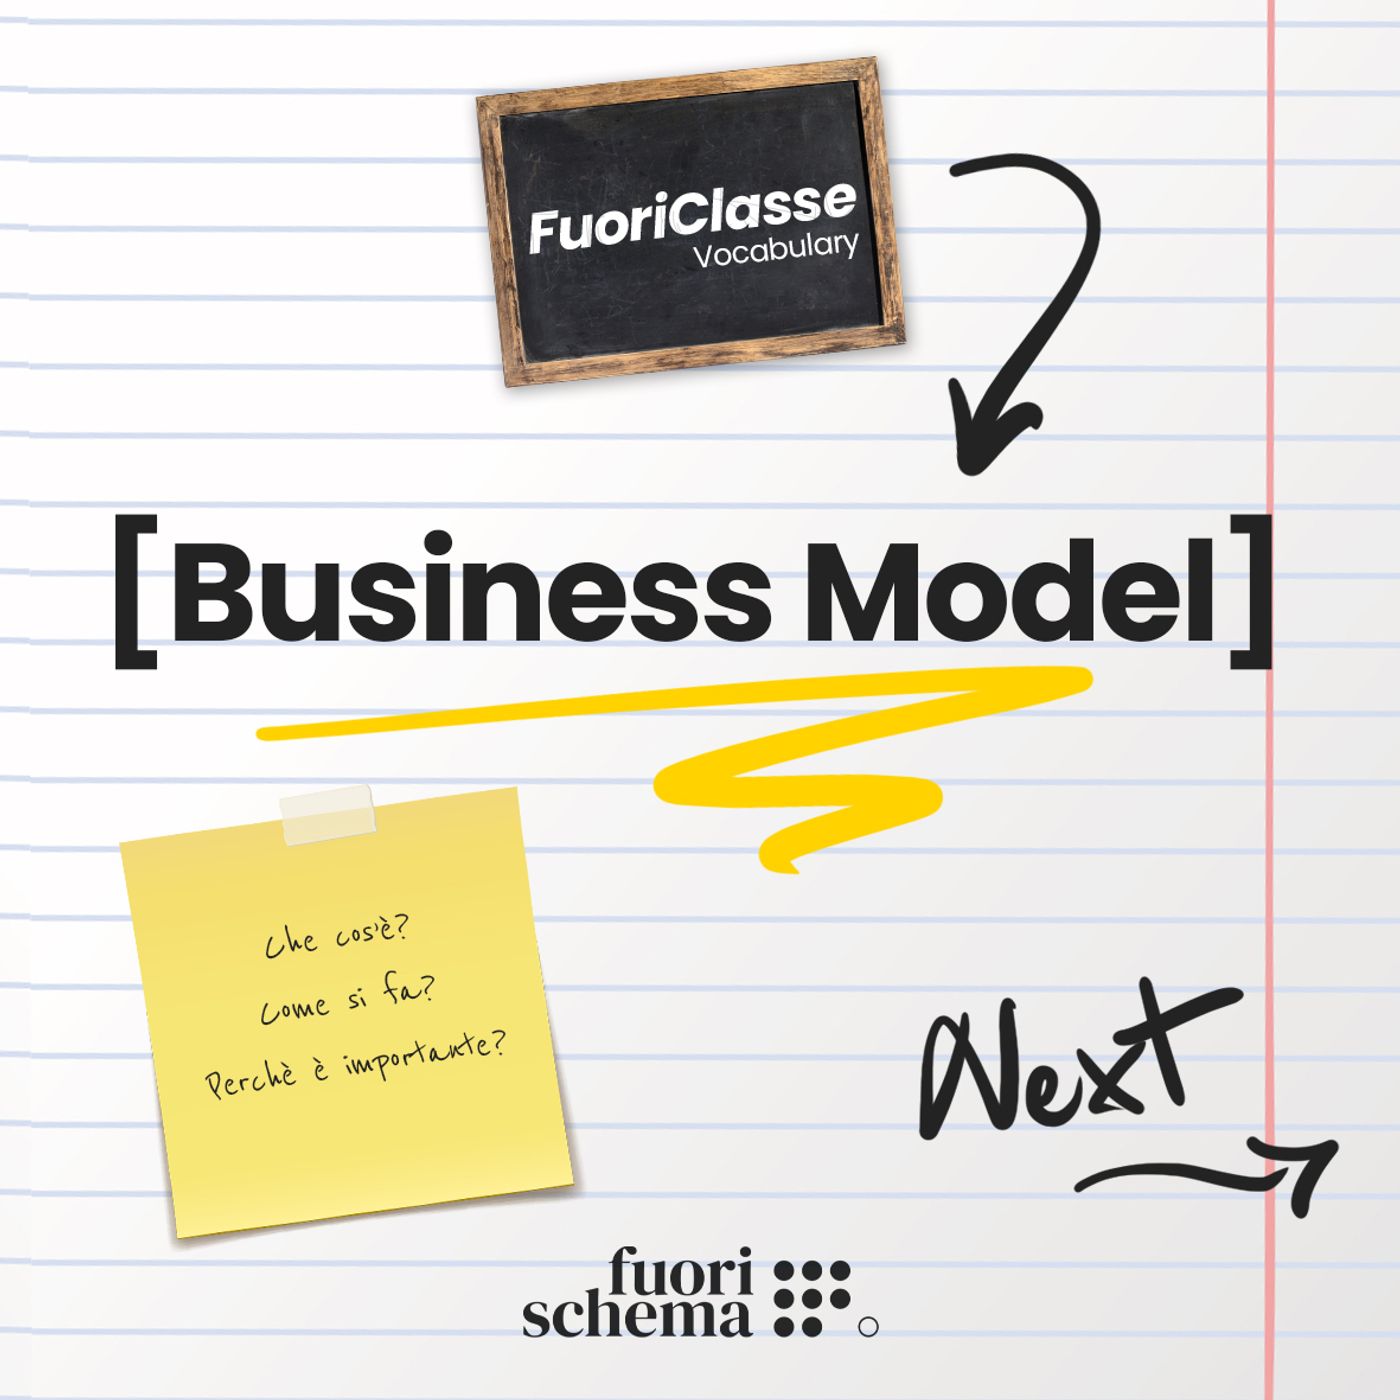 Business Model | FuoriClasse